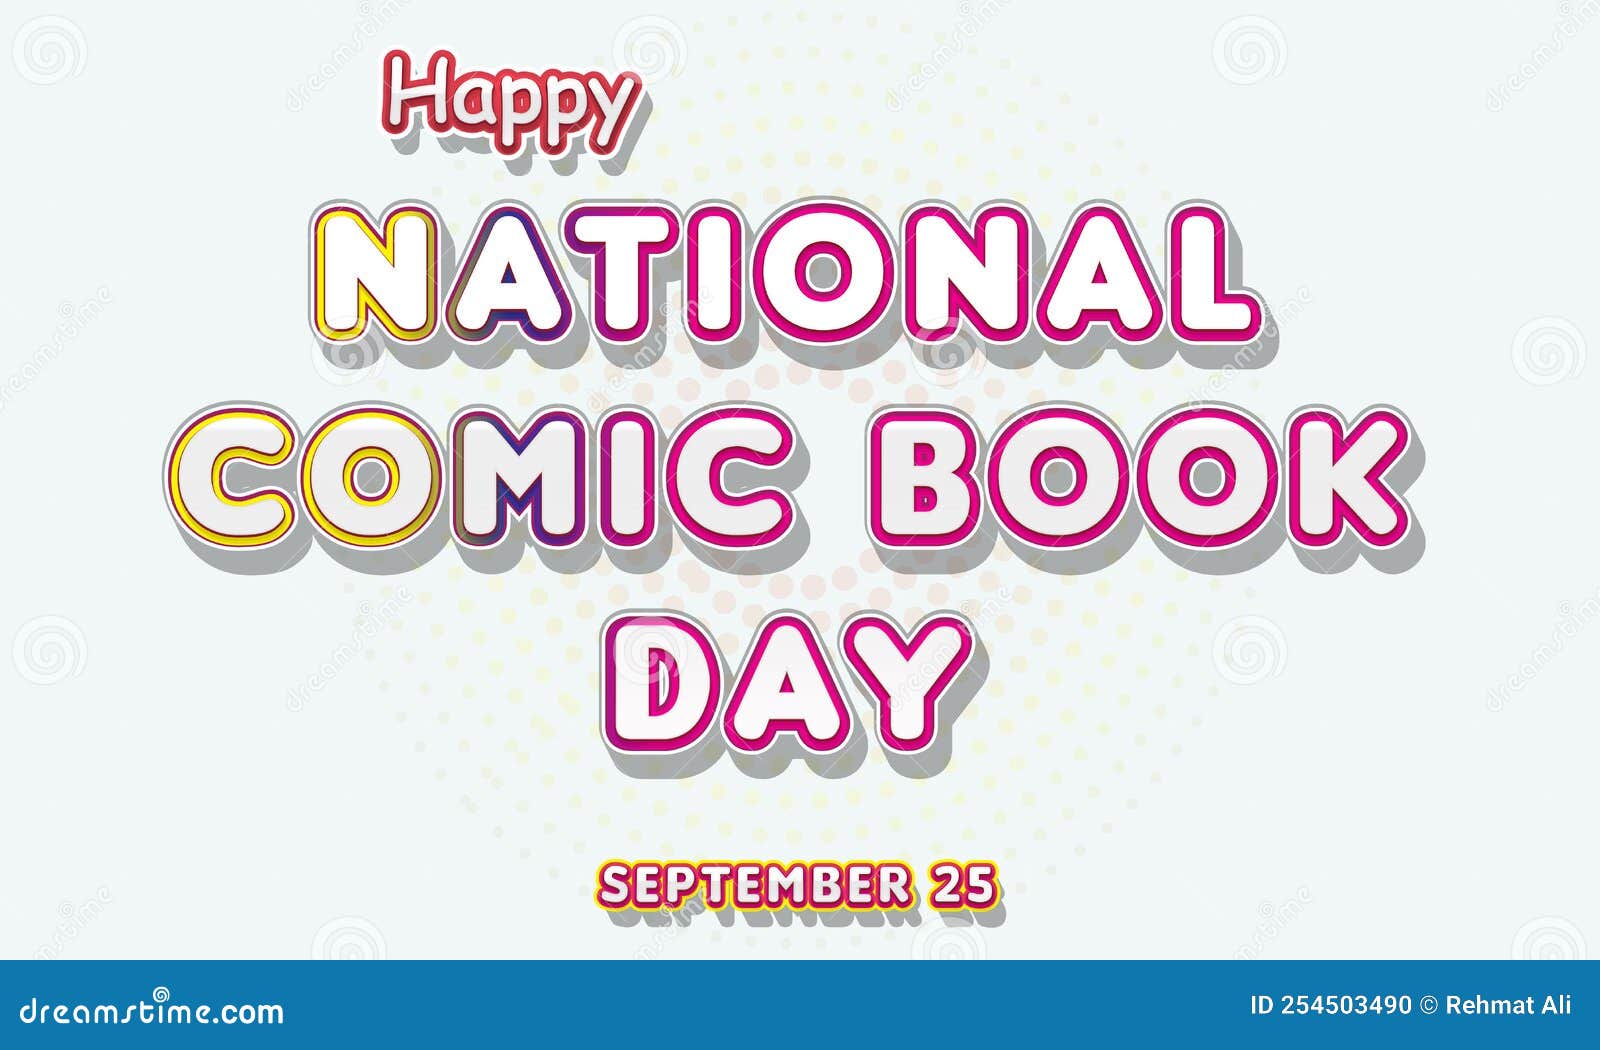 Happy National Comic Book Day, September 25. Calendar of September Text